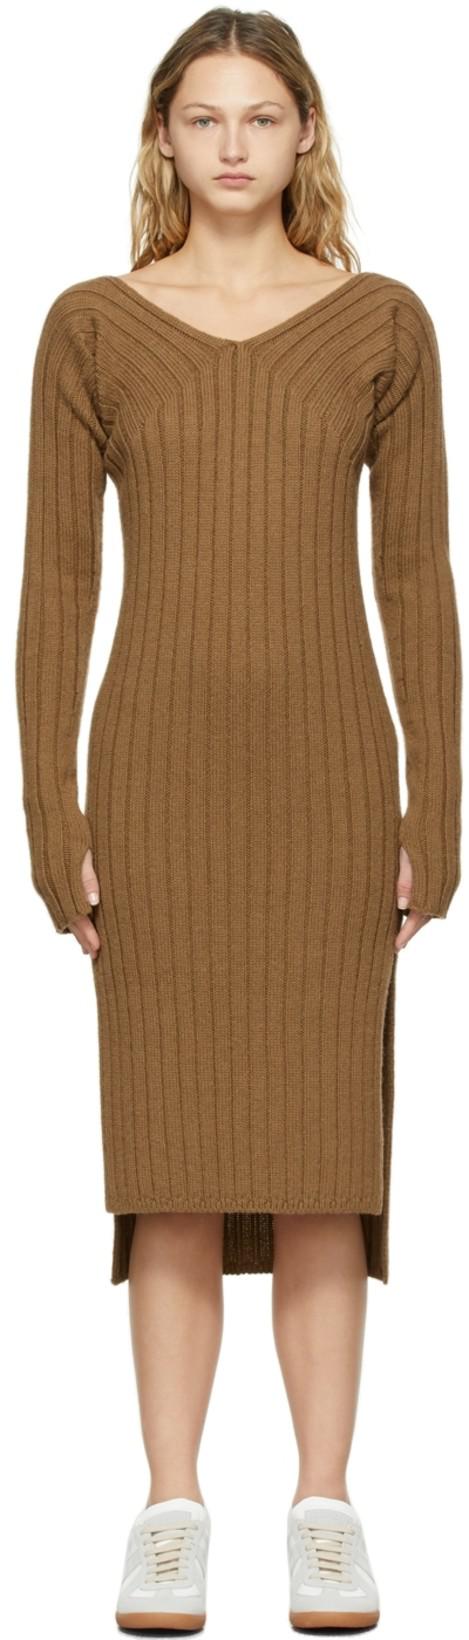 Brown Collagen Sleeve Knit Dress by DETERM;